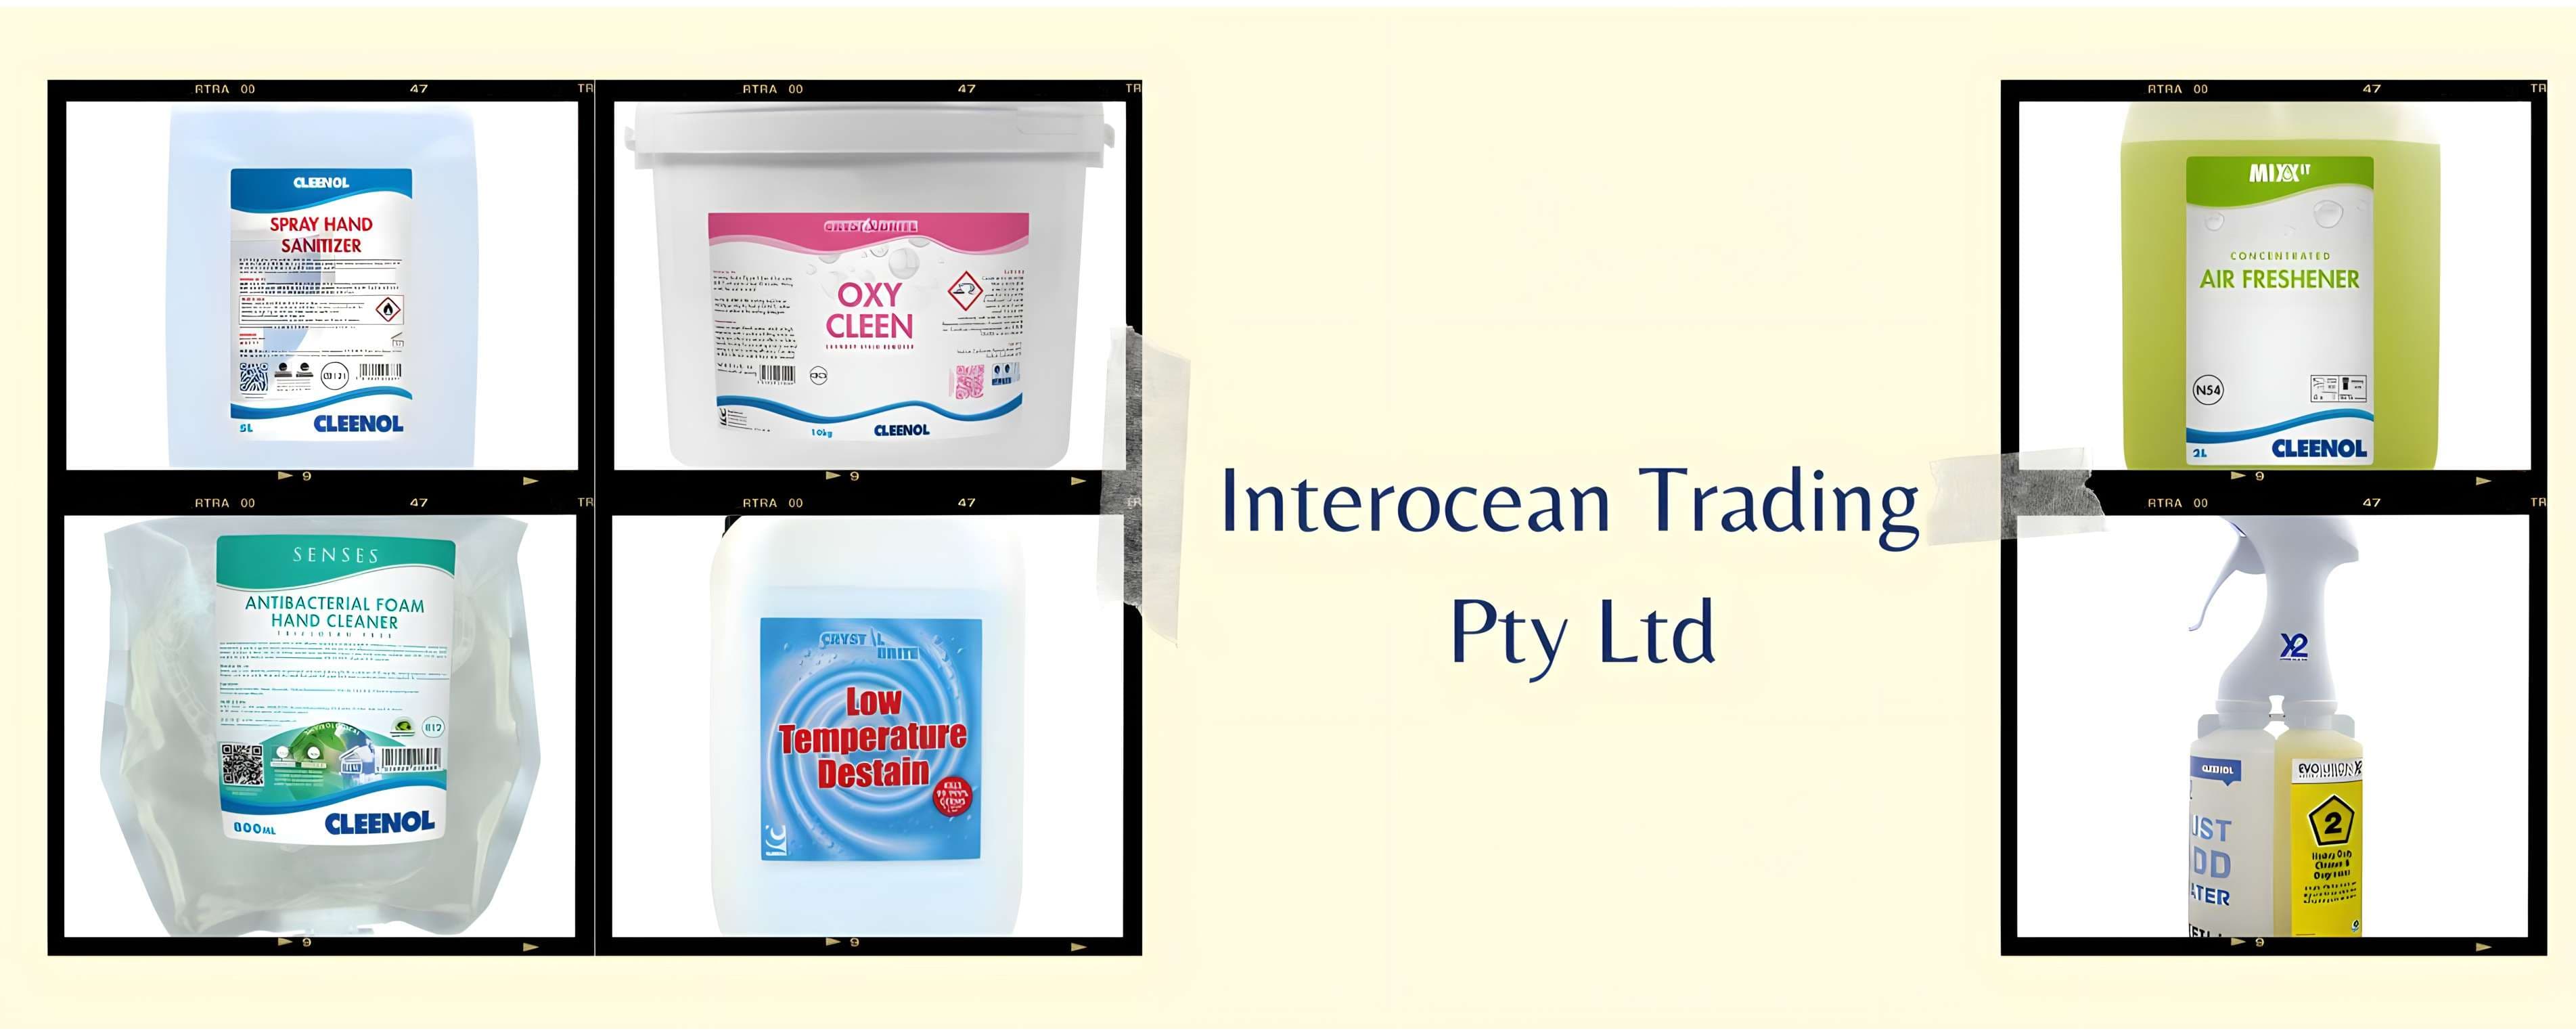 Interocean Trading Pty Ltd